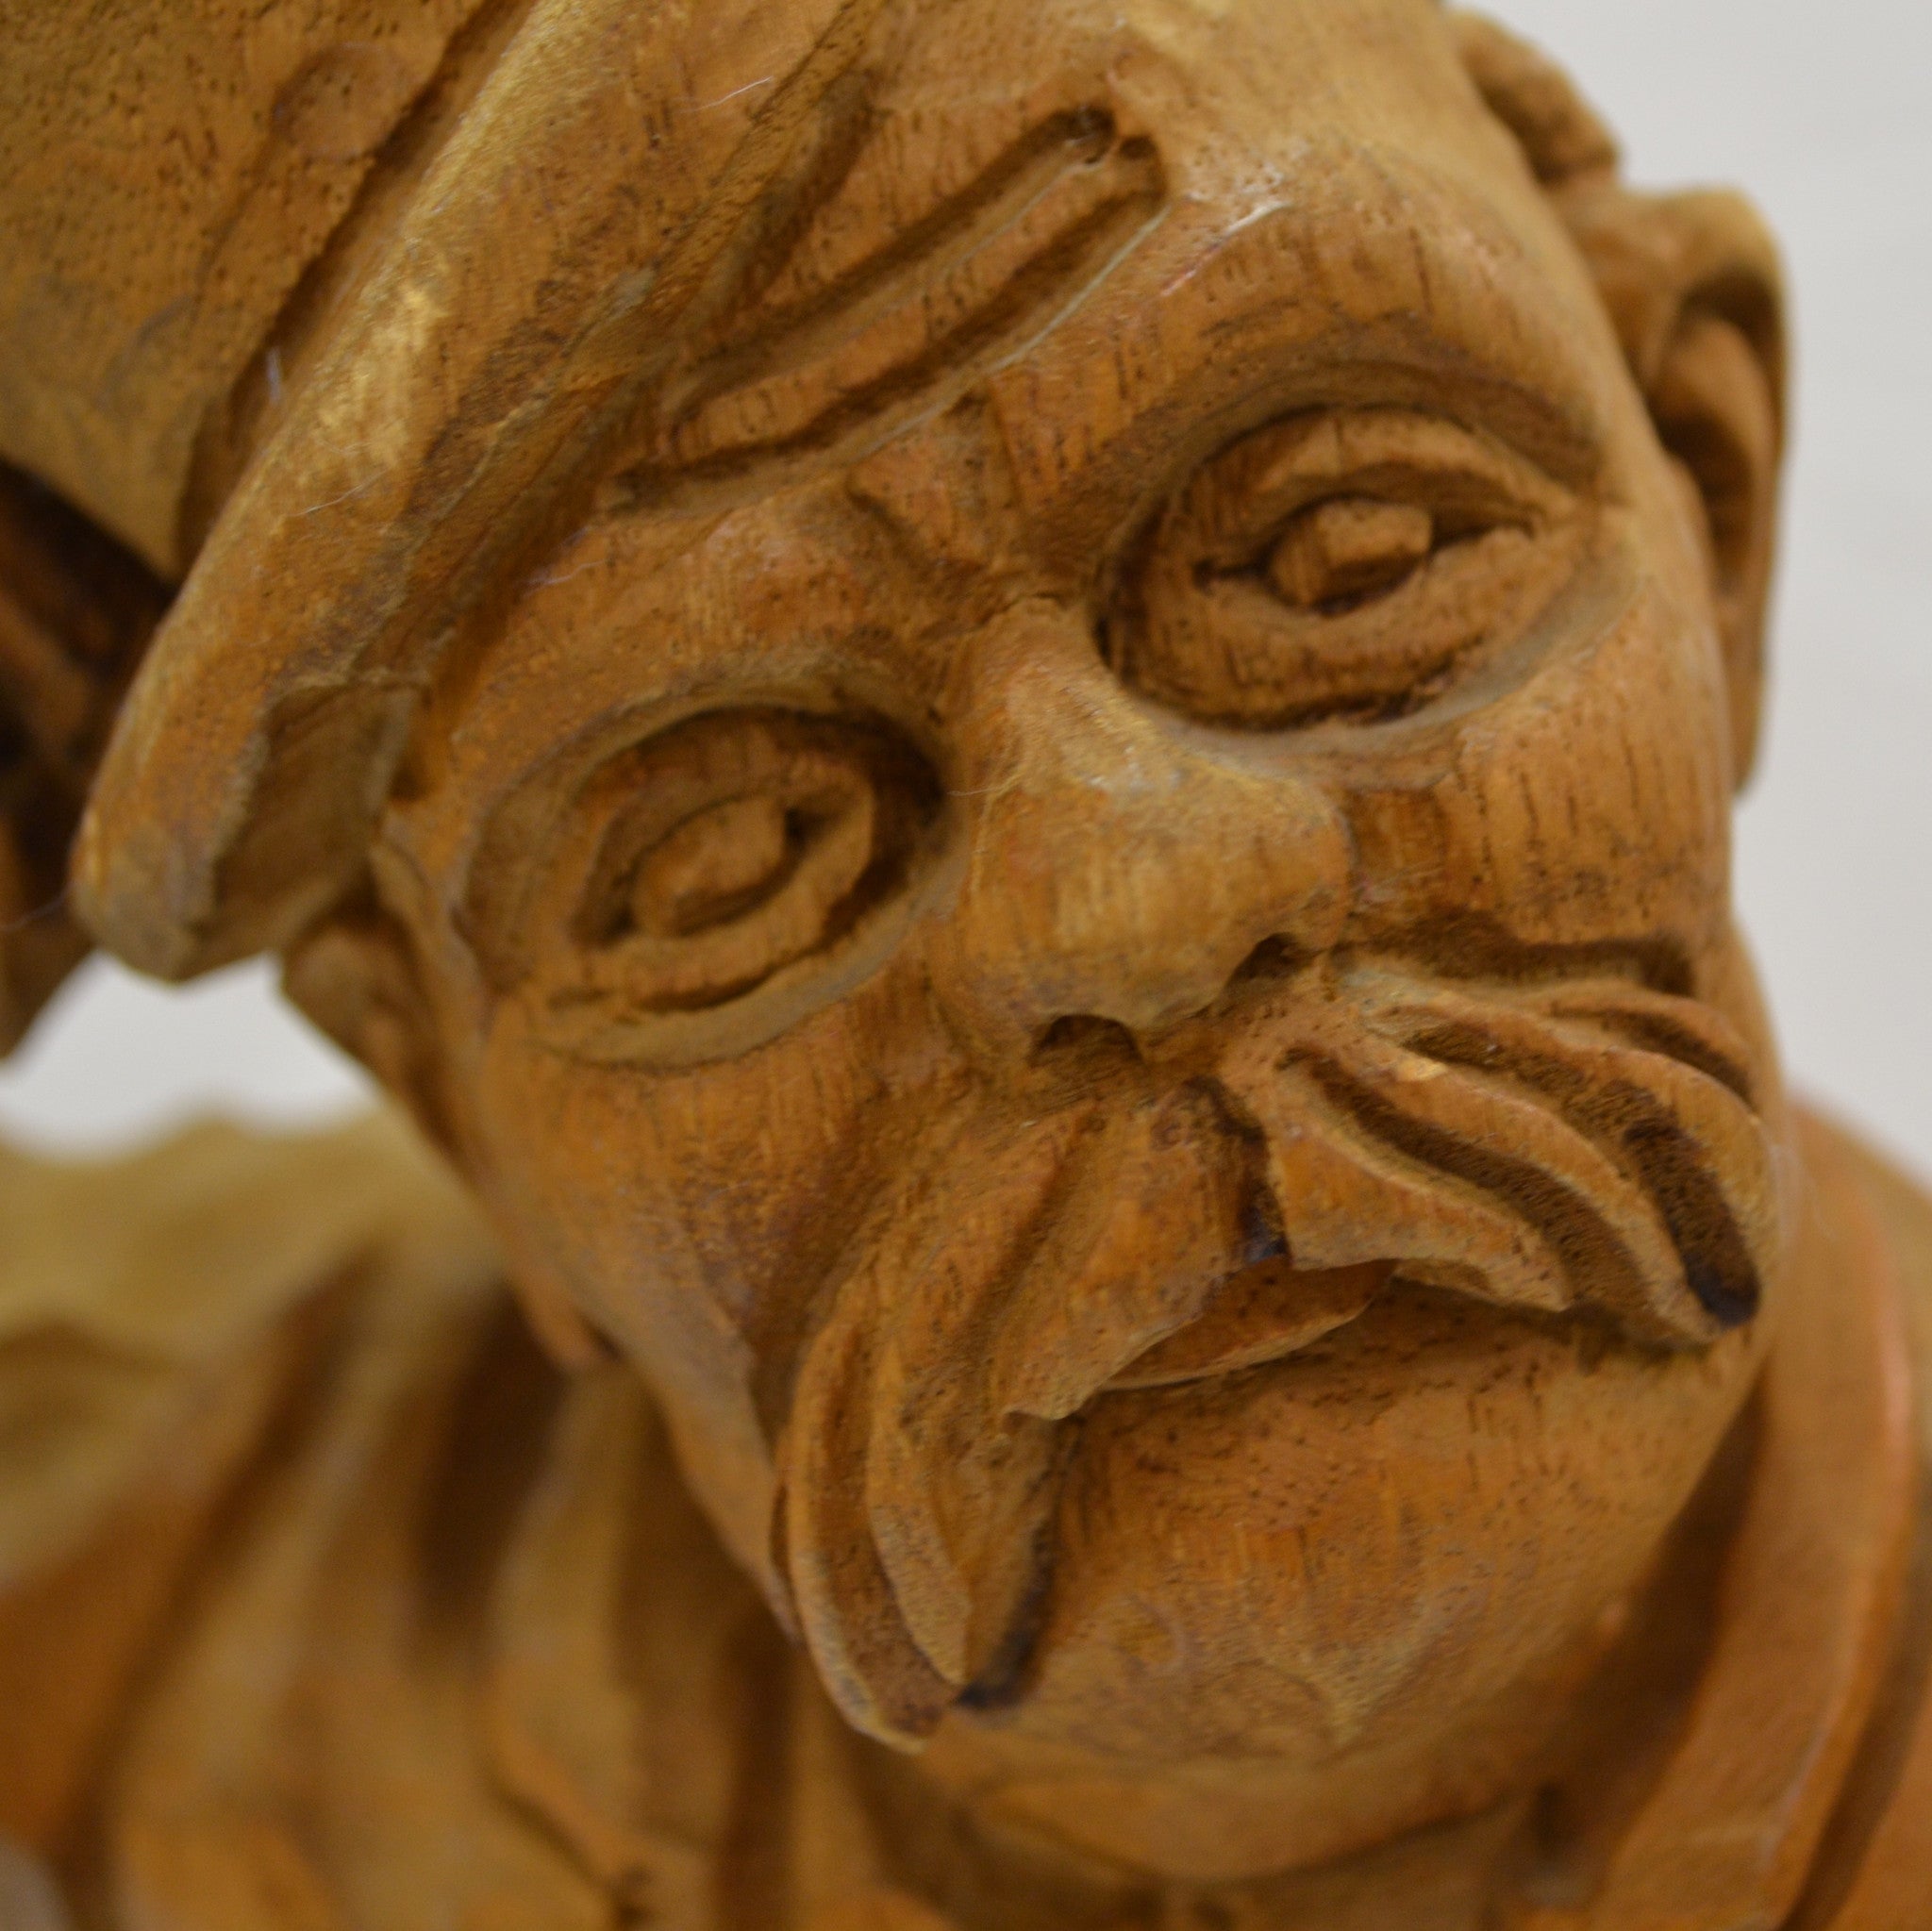 Mayor Tipping Hat Folk Art Carving - face